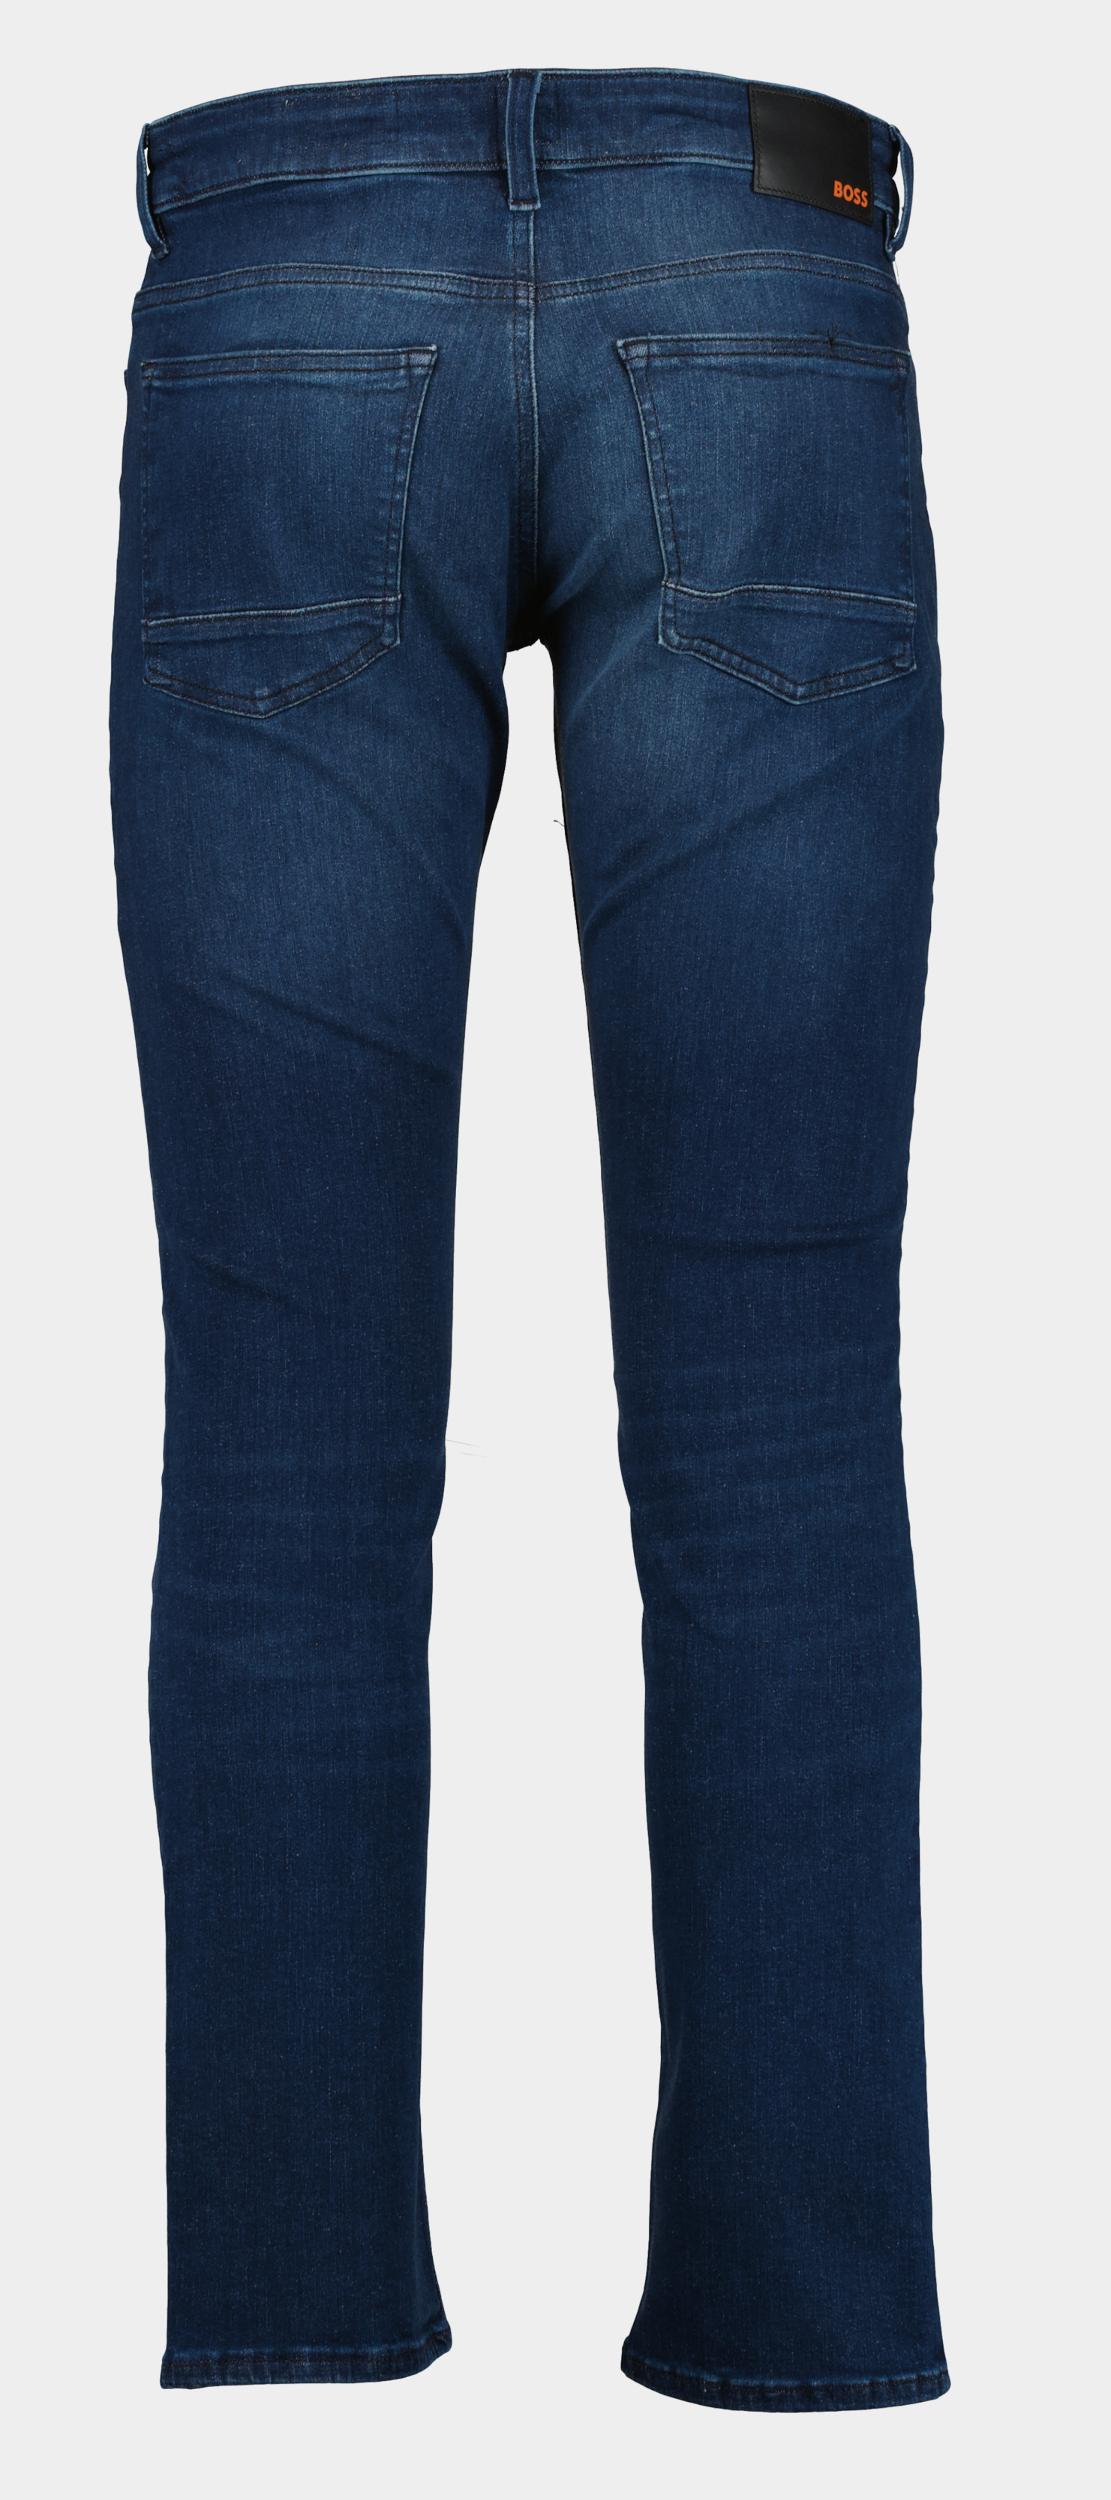 BOSS Orange 5-Pocket Jeans Blauw Delaware BC-C 10256798 02 50517864/407